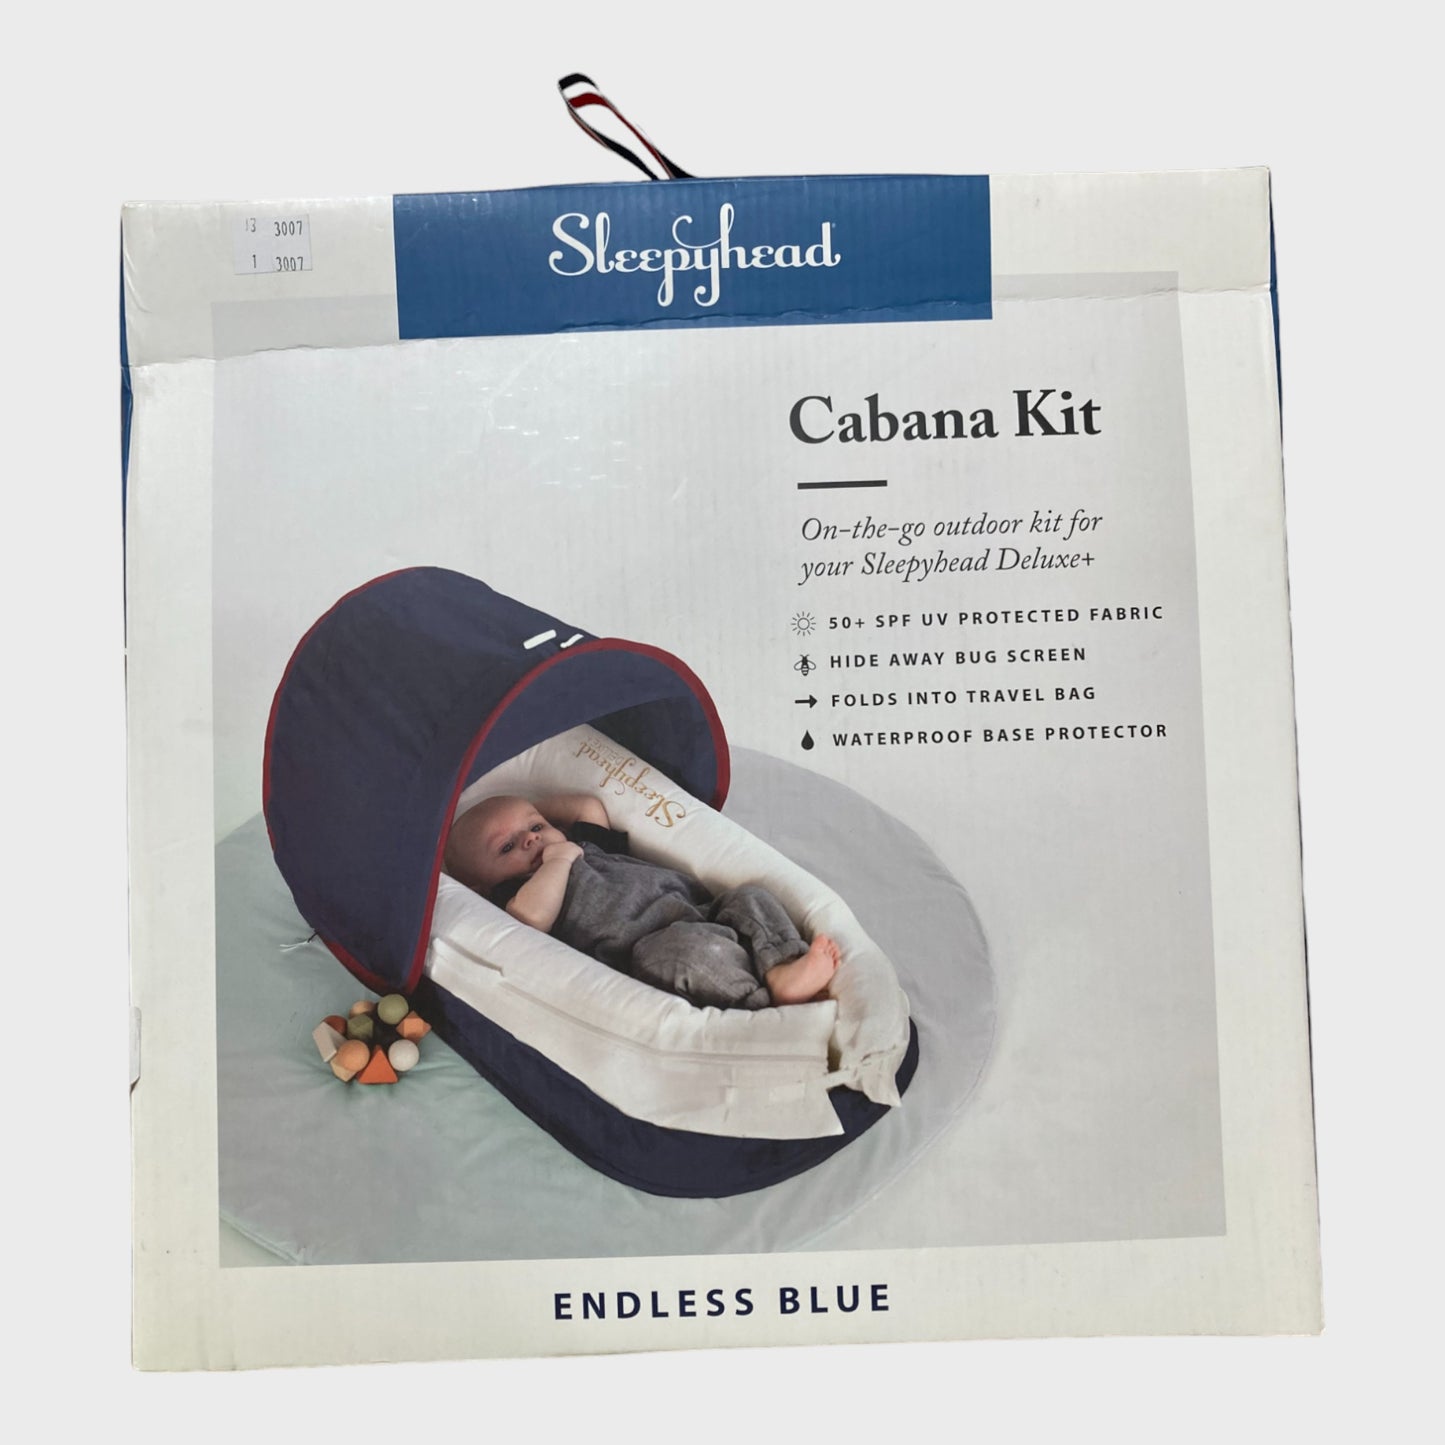 Sleepyhead Cabana Kit for Deluxe+